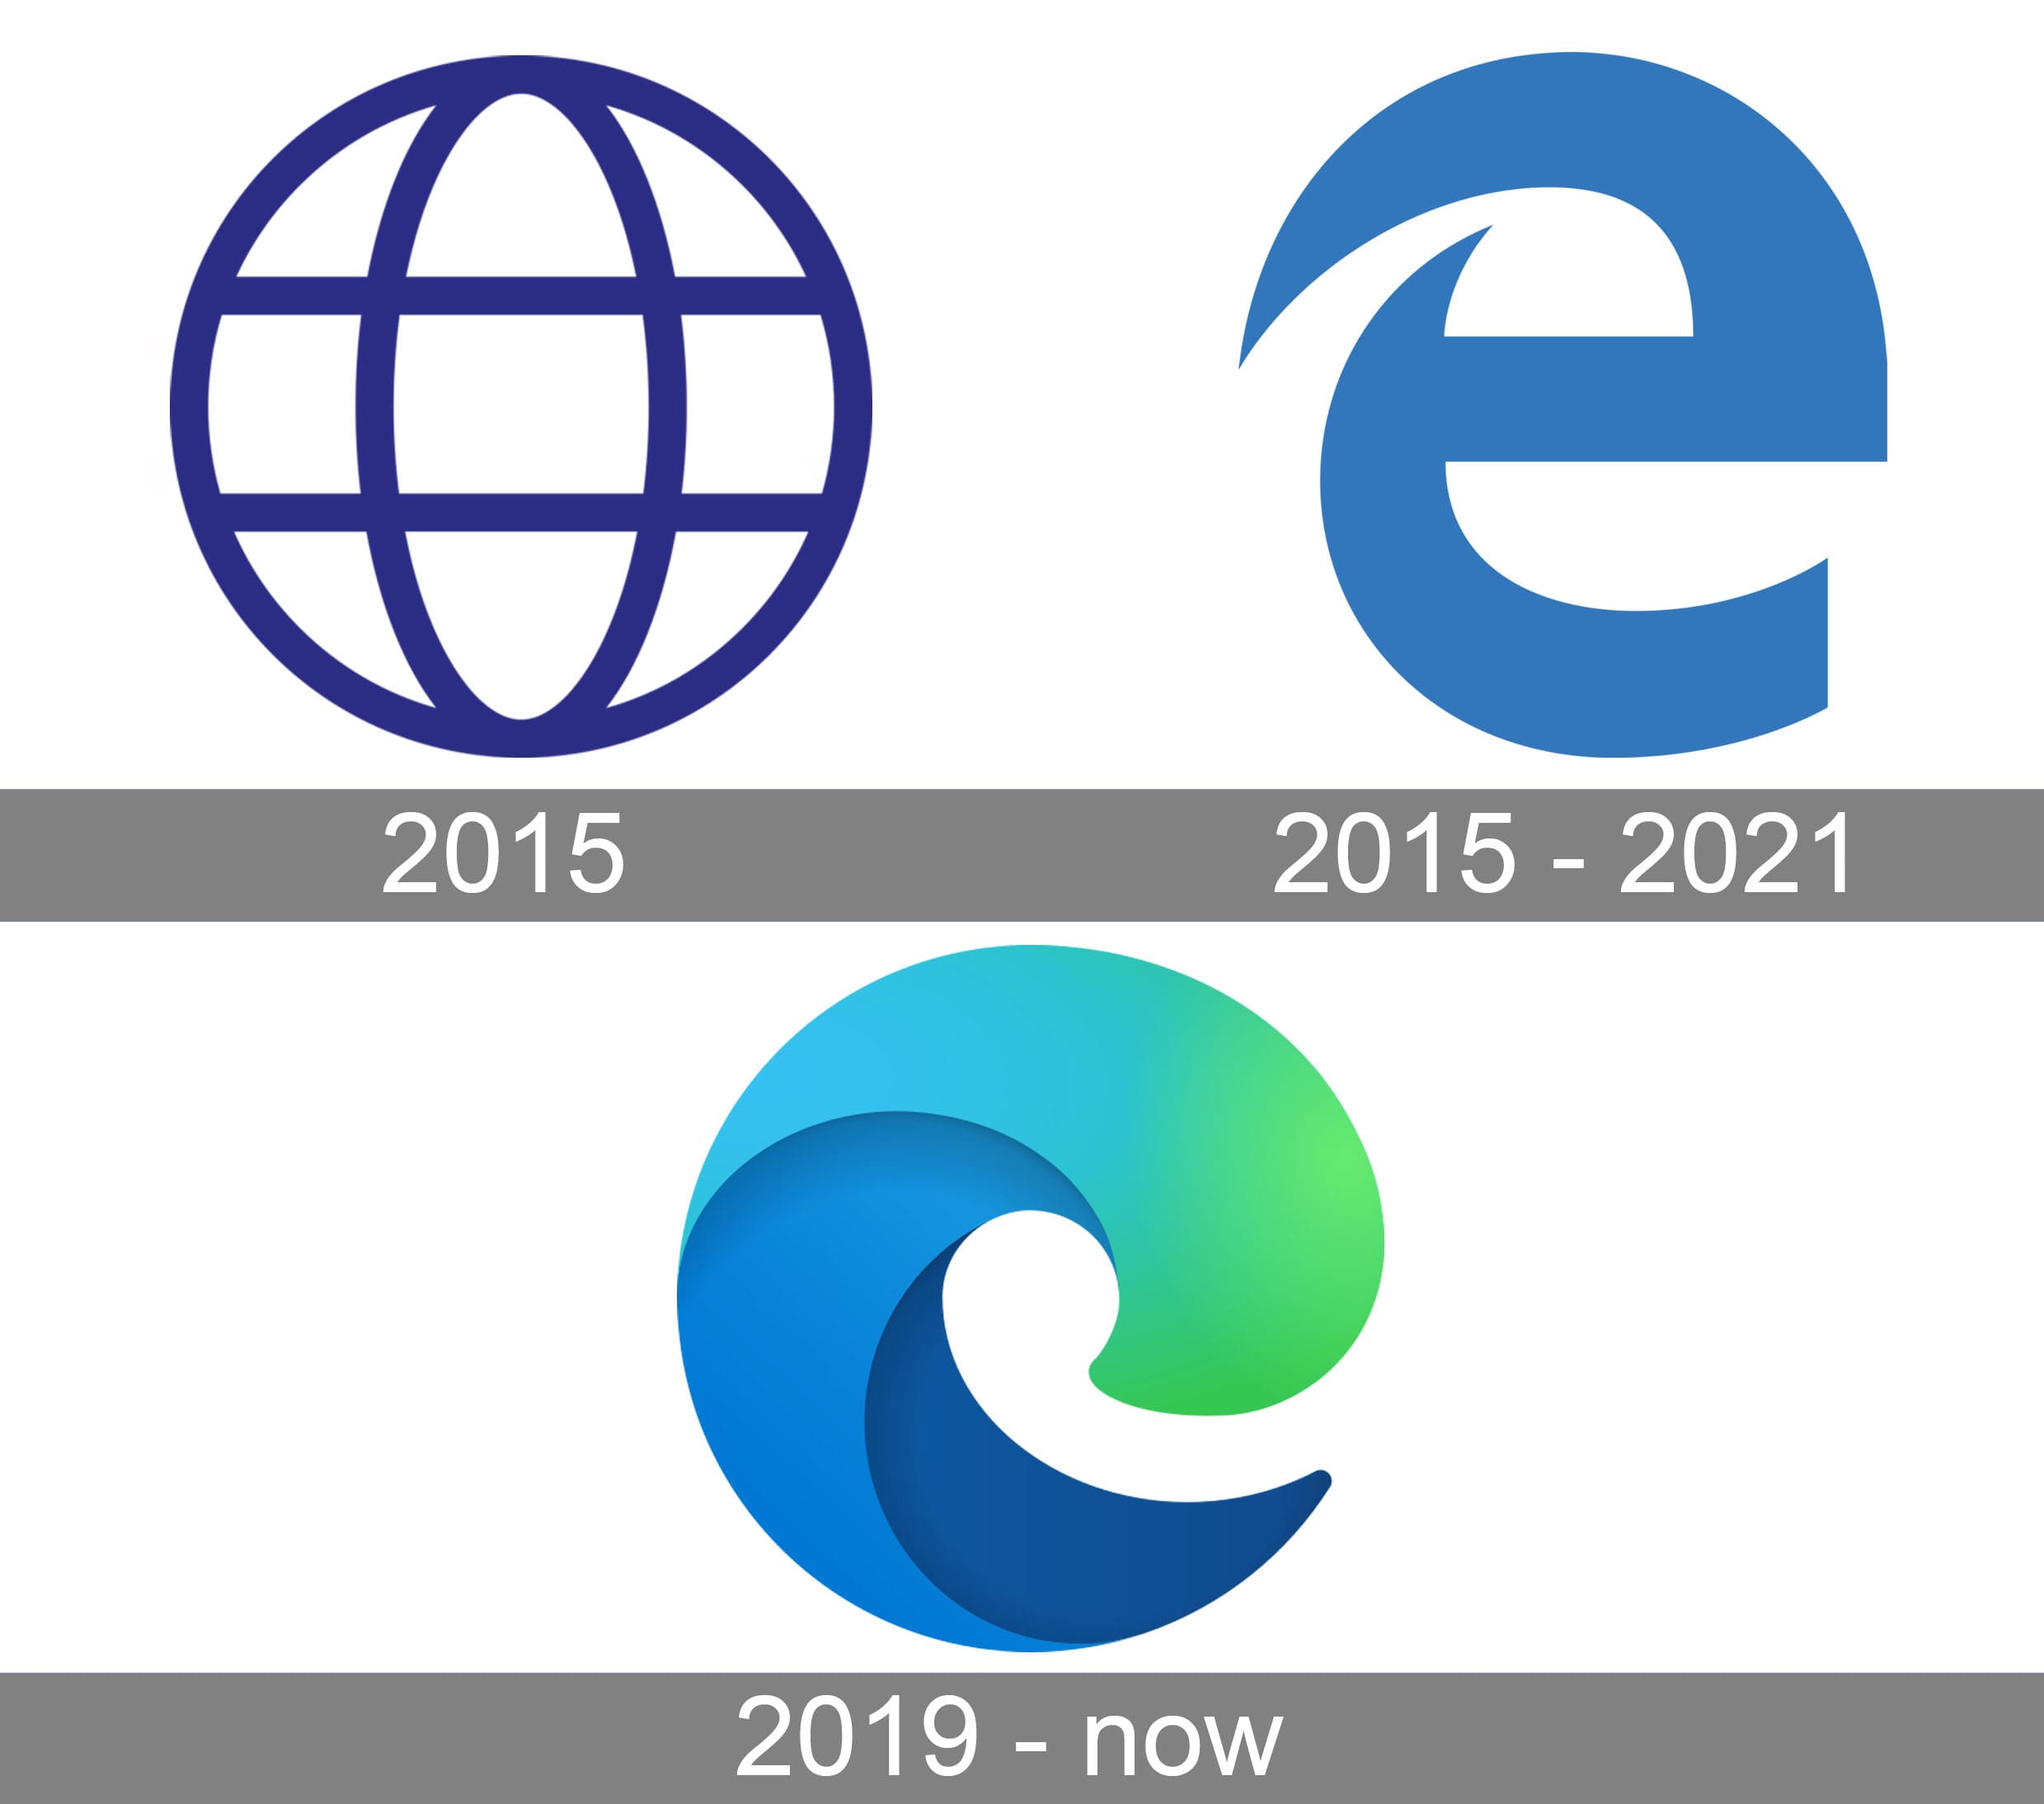 Microsoft edge browser brand logo symbol with name